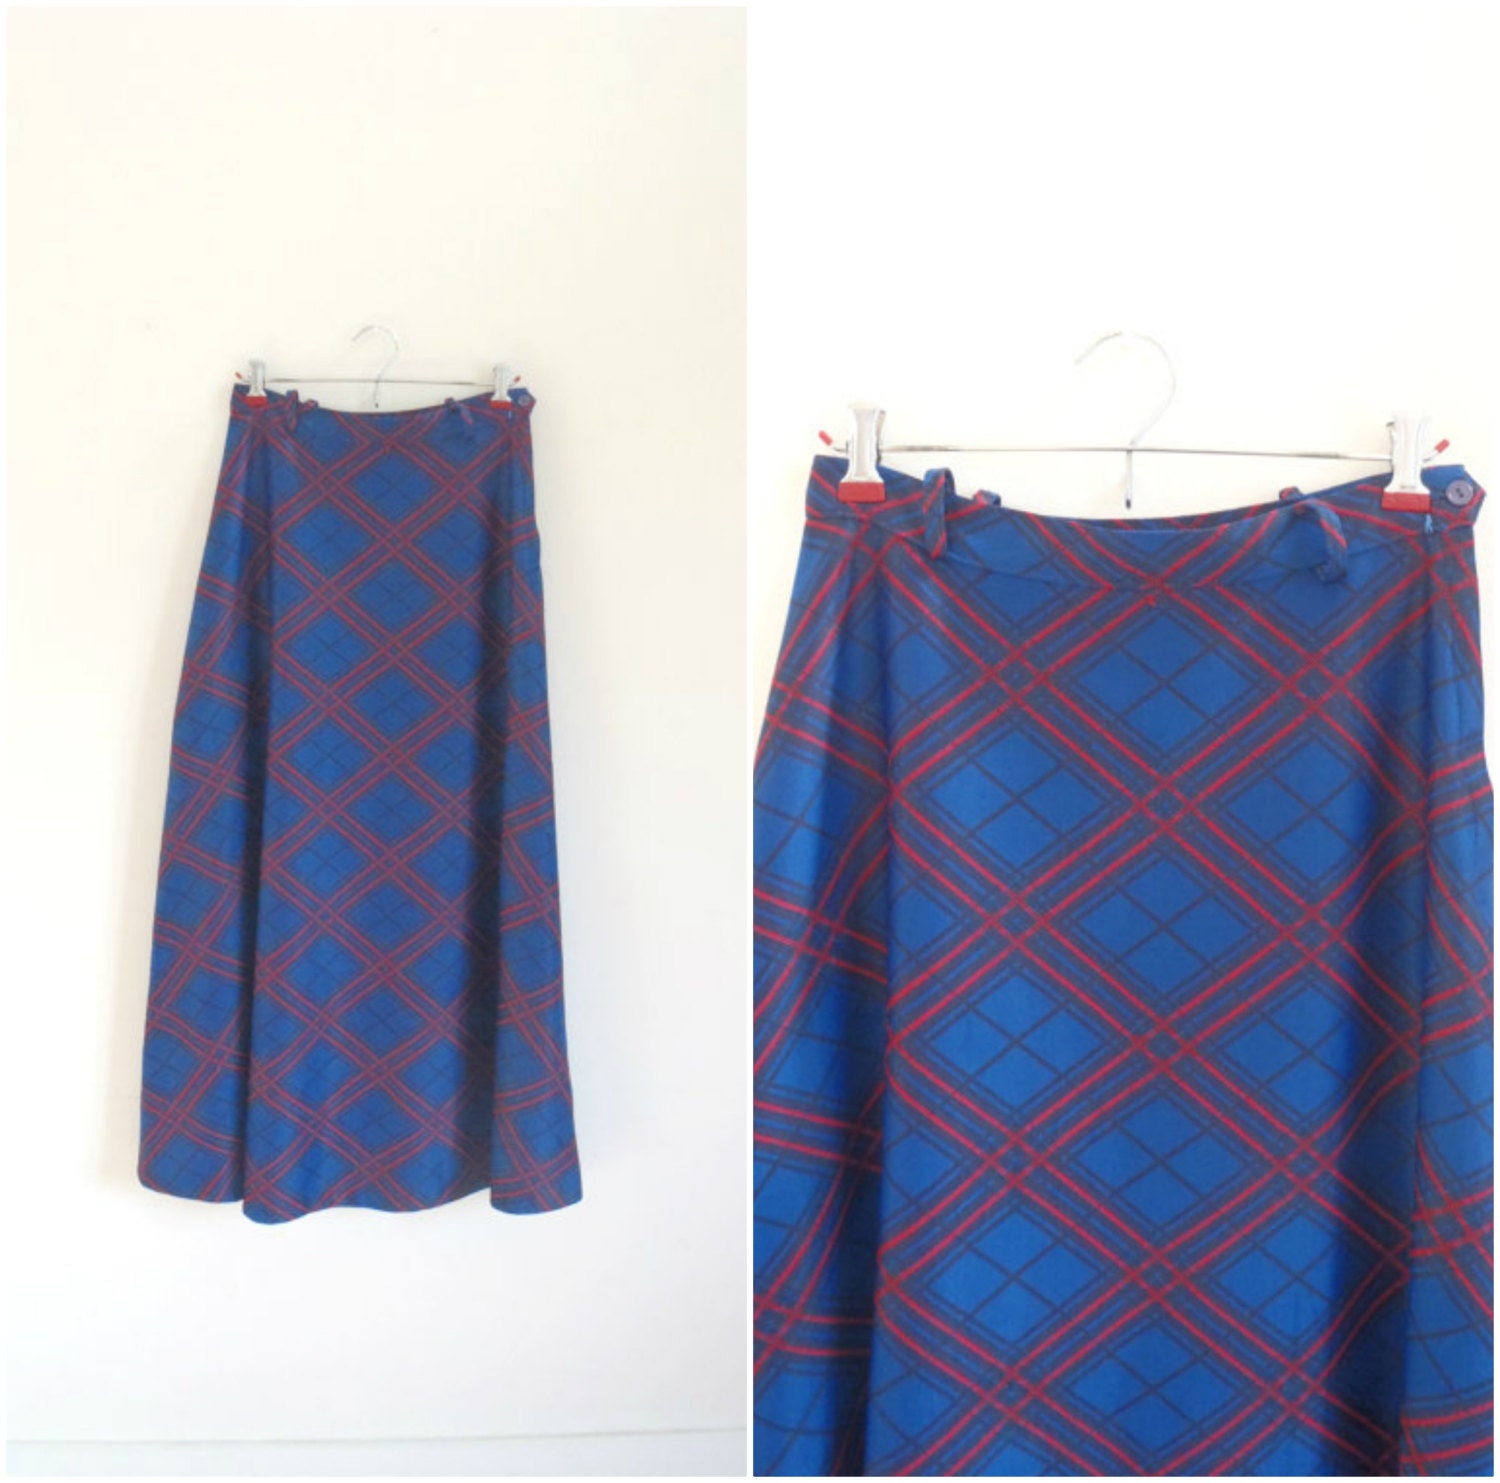 Vintage retro royal blue and red plaid skirt / A-line maxi